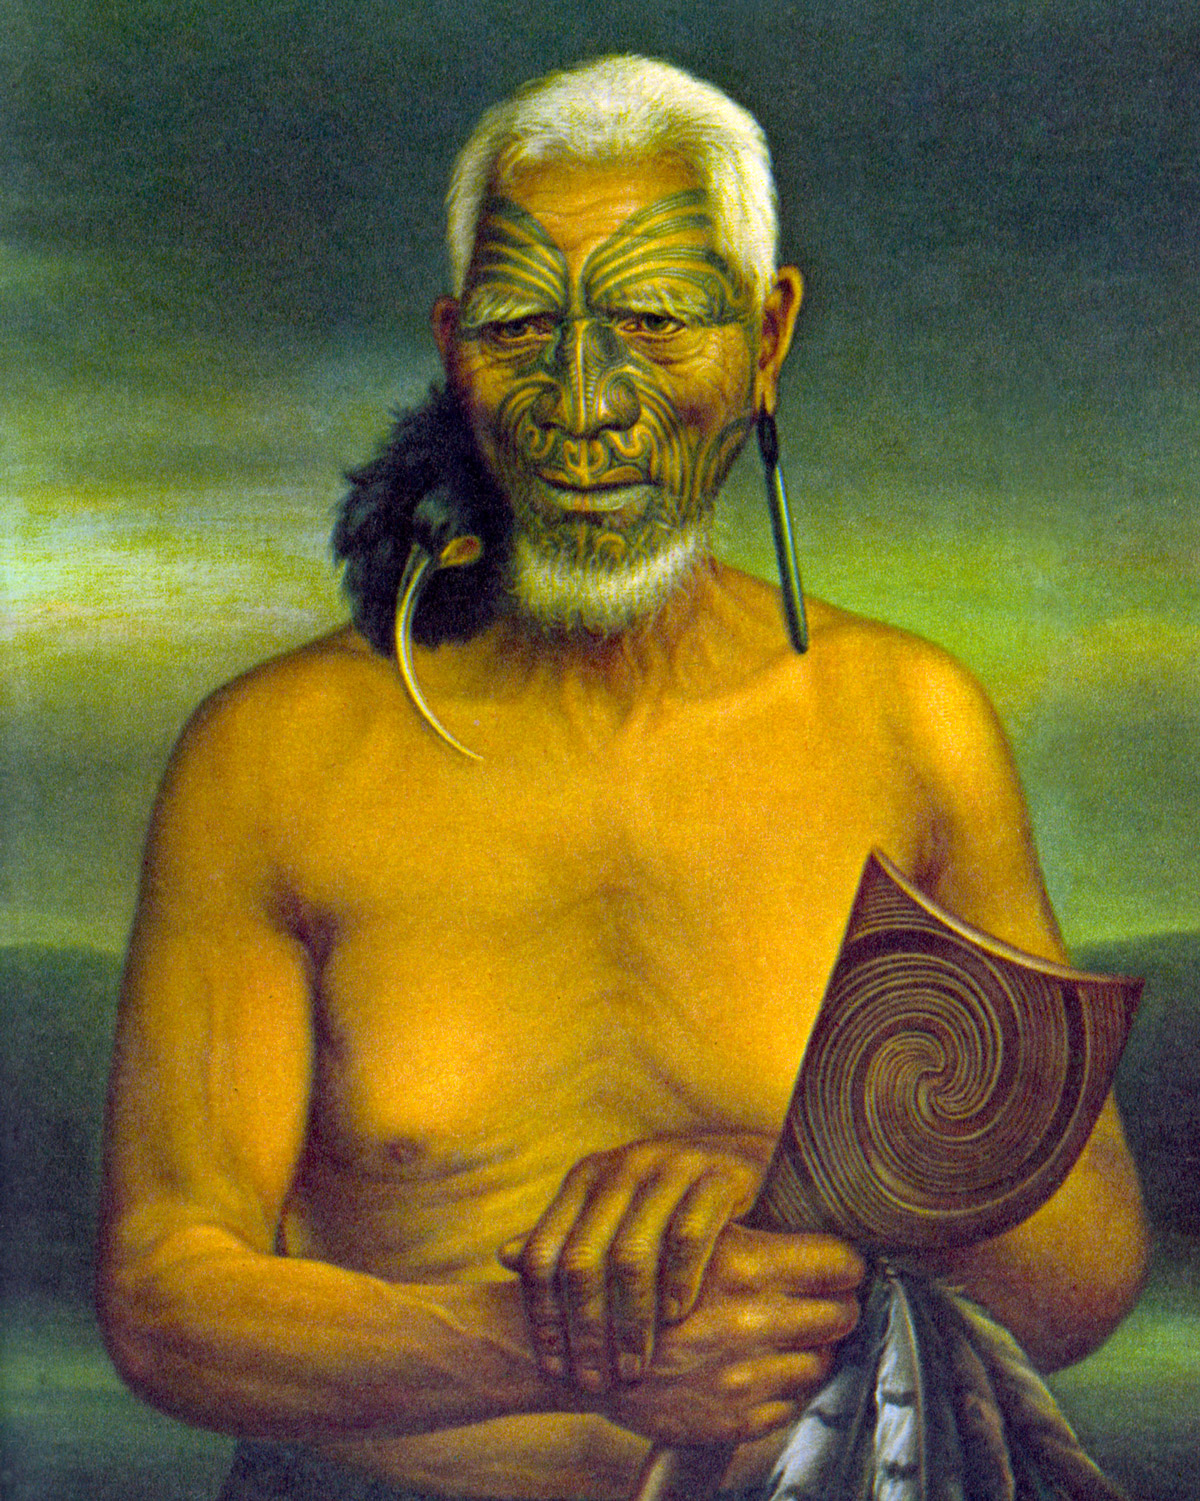 A late-nineteenth century painting by Gottfried Lindauer of Maori chief Tukukino.